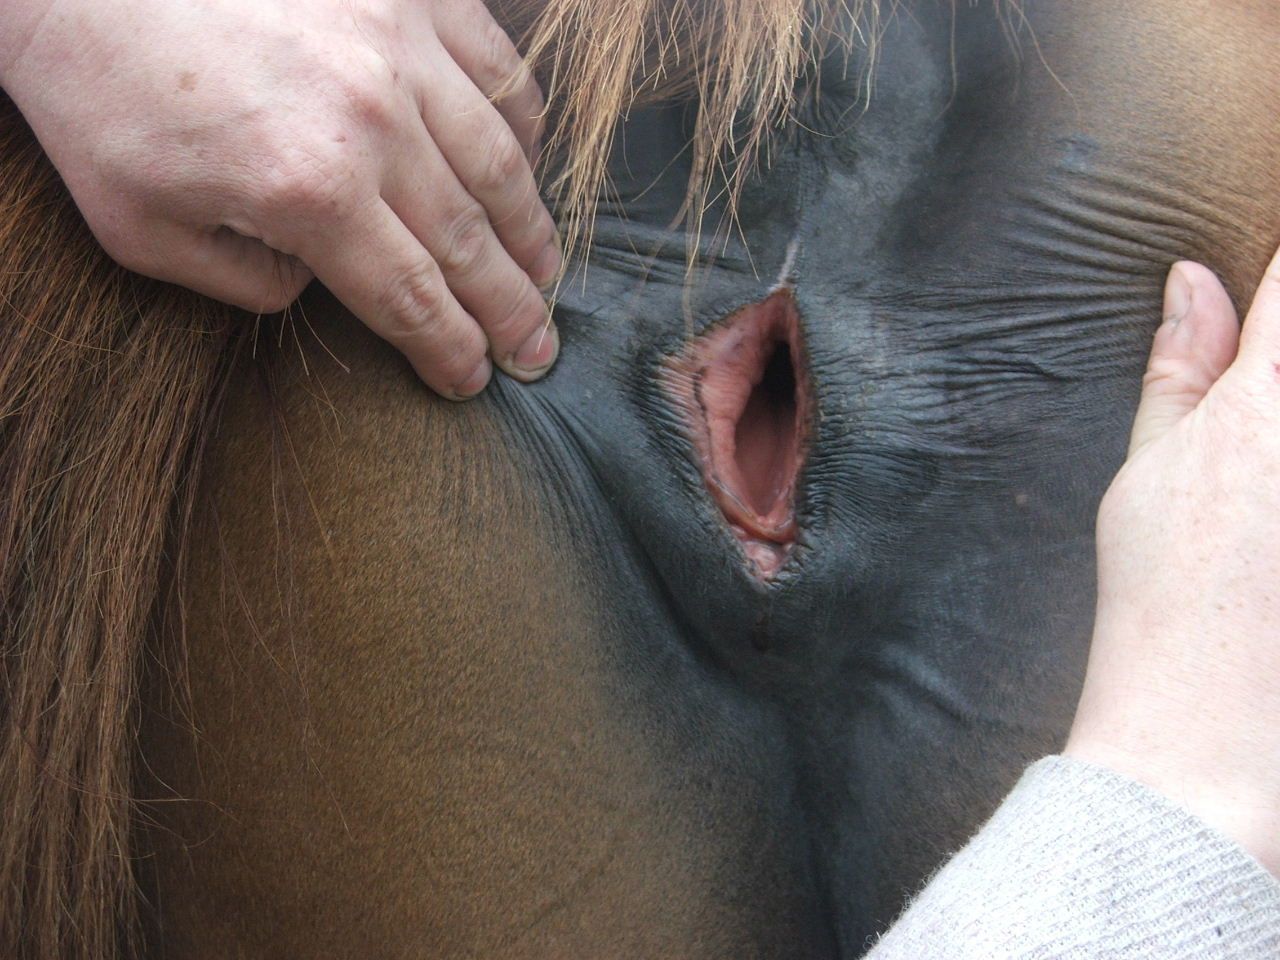 Horse Vagina Porn - Man puck pusies horse - Porn best image 100% free.